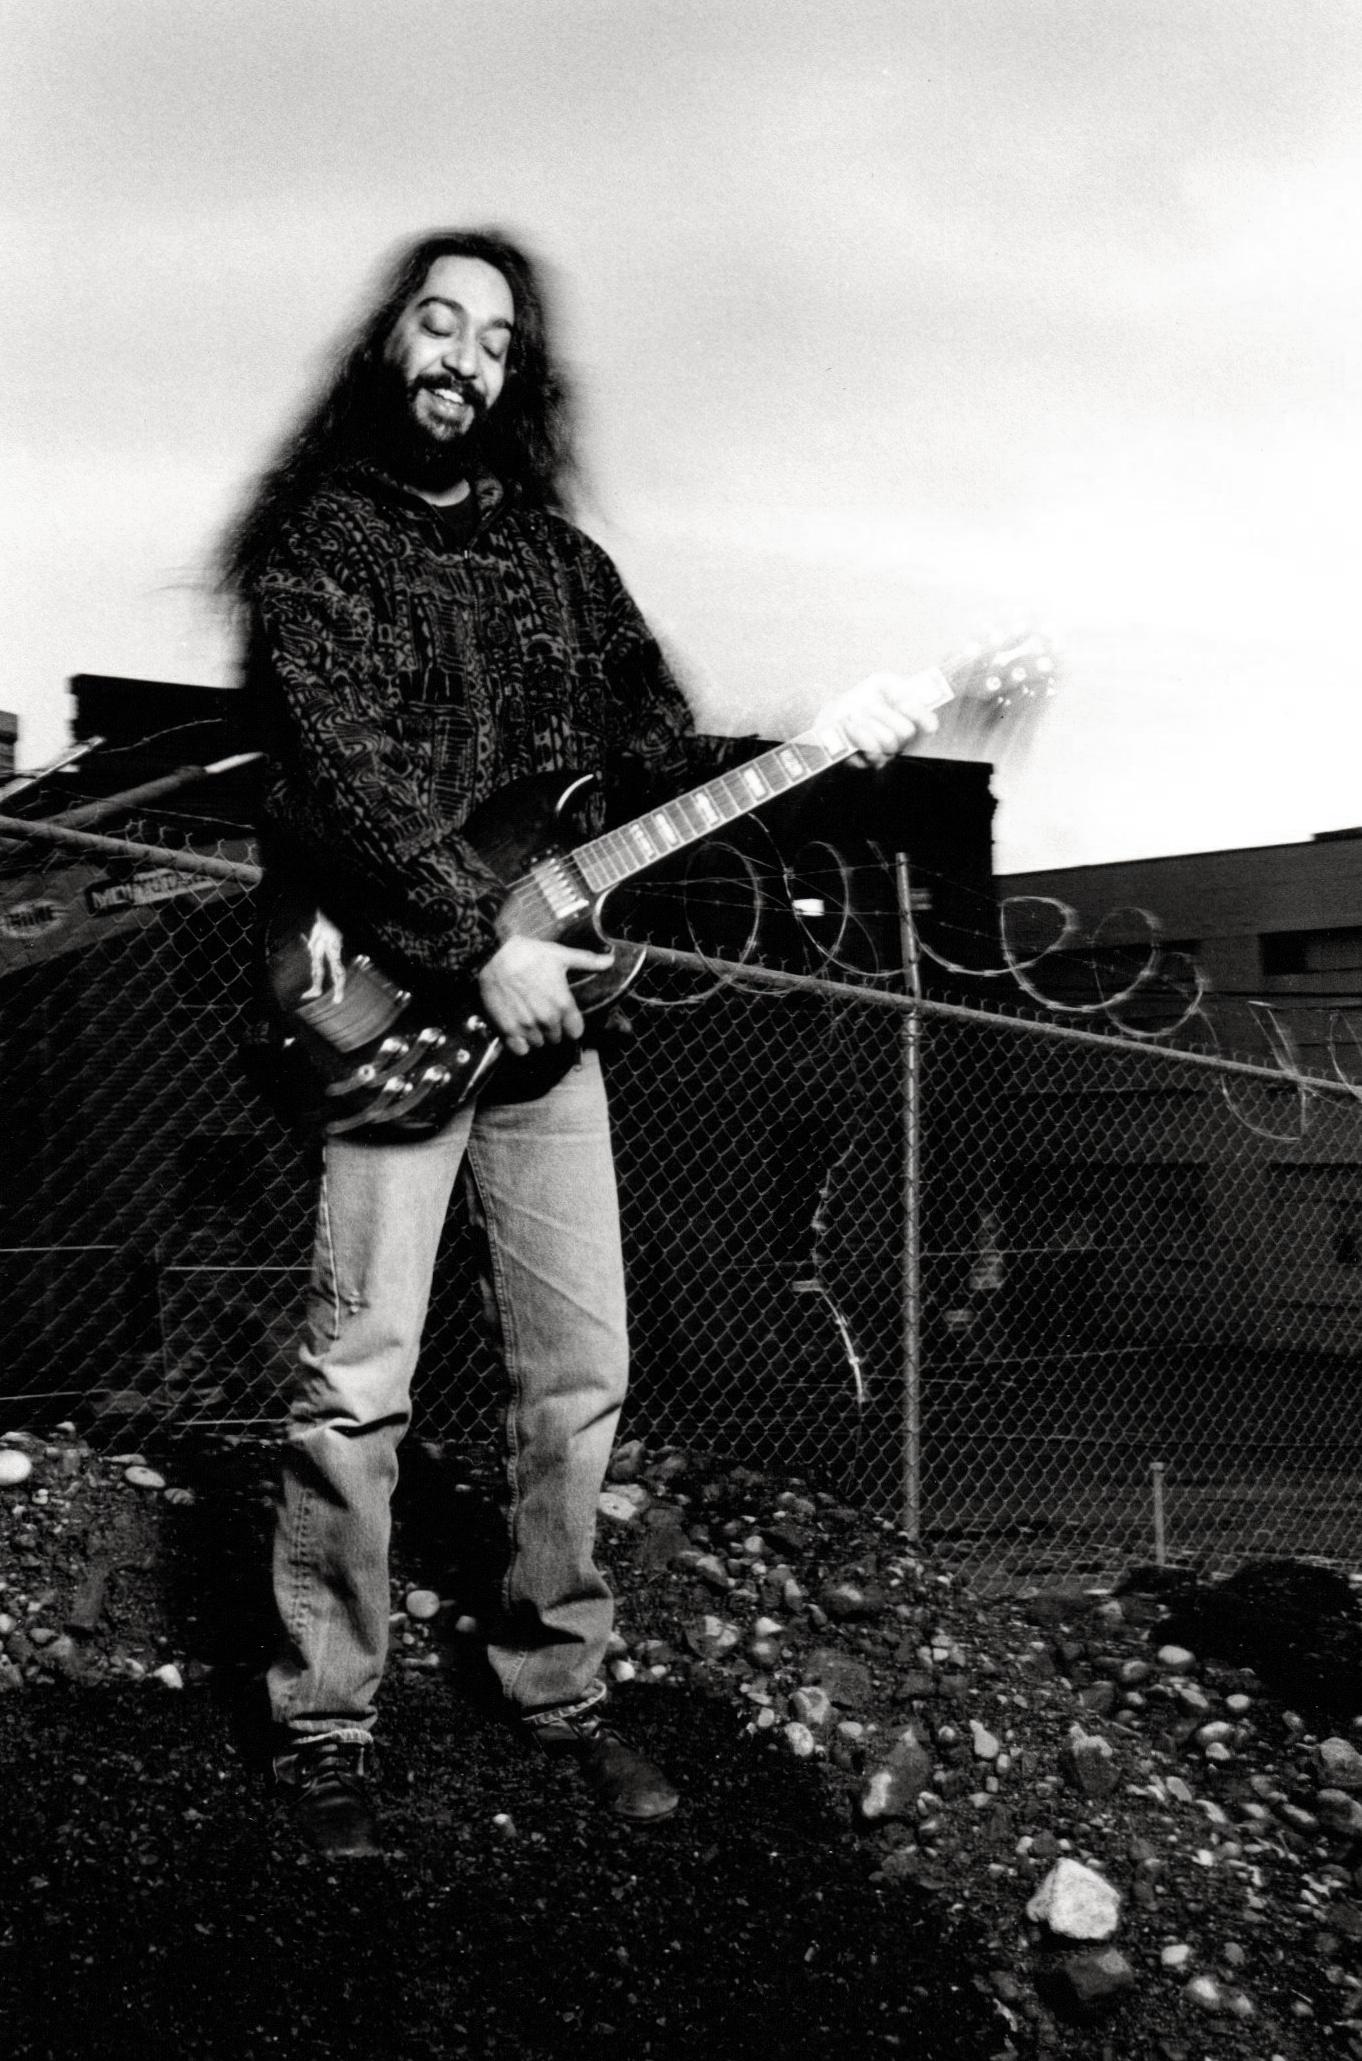 Unknown Portrait Photograph - Kim Thayil of Soundgarden with Guitar Vintage Original Photograph